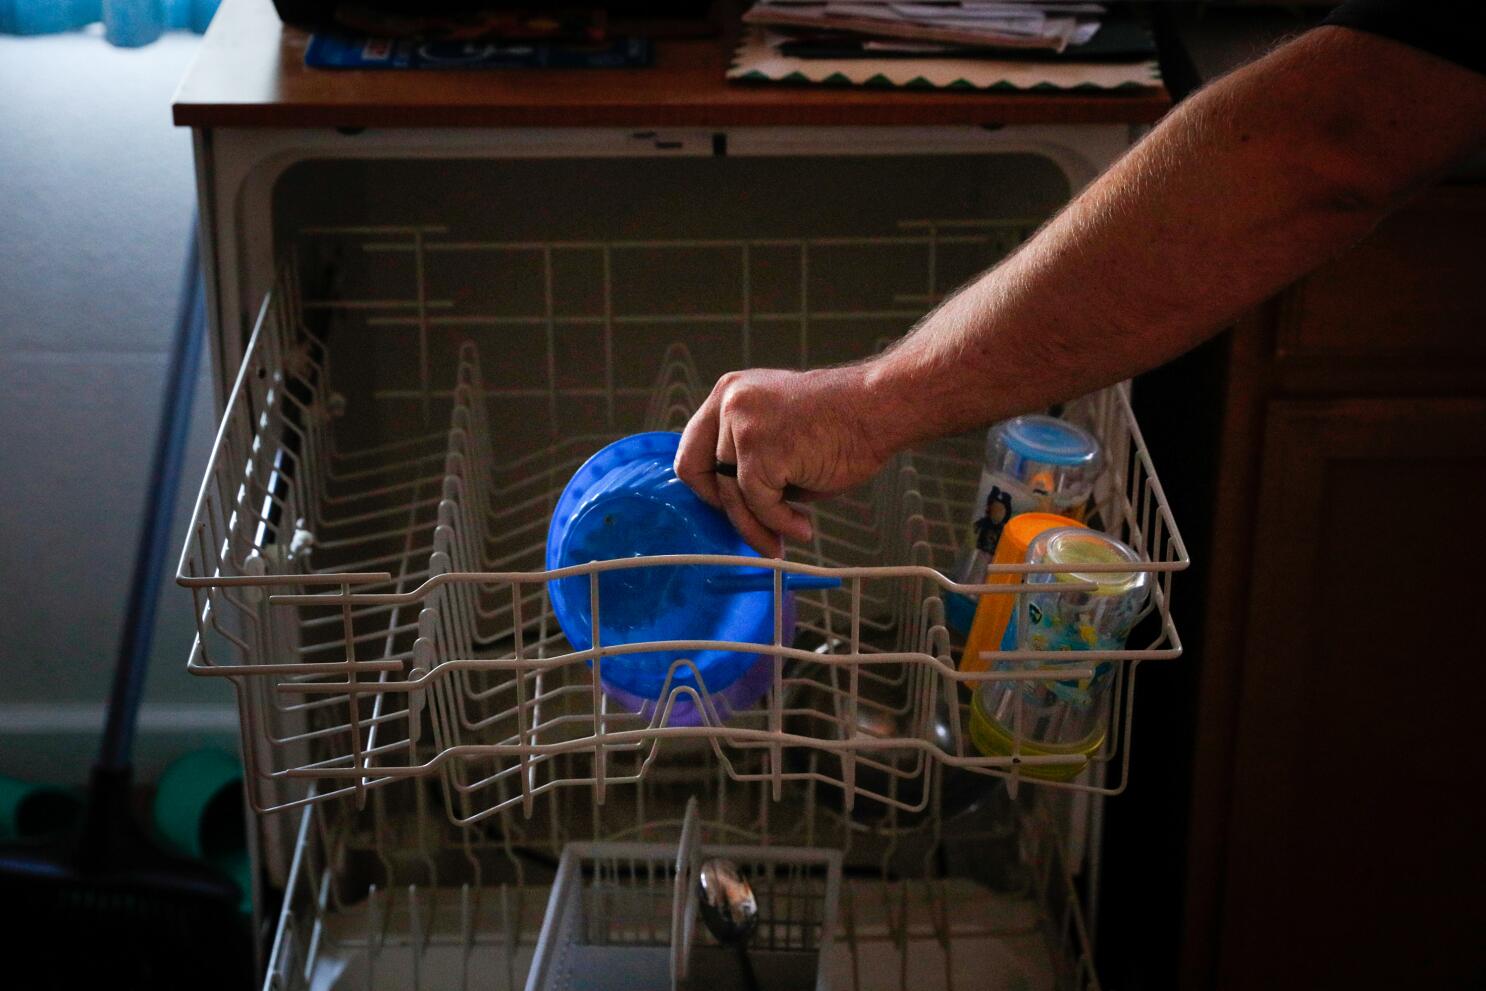 6 Simple Steps to Make Your Dishwasher Work Harder